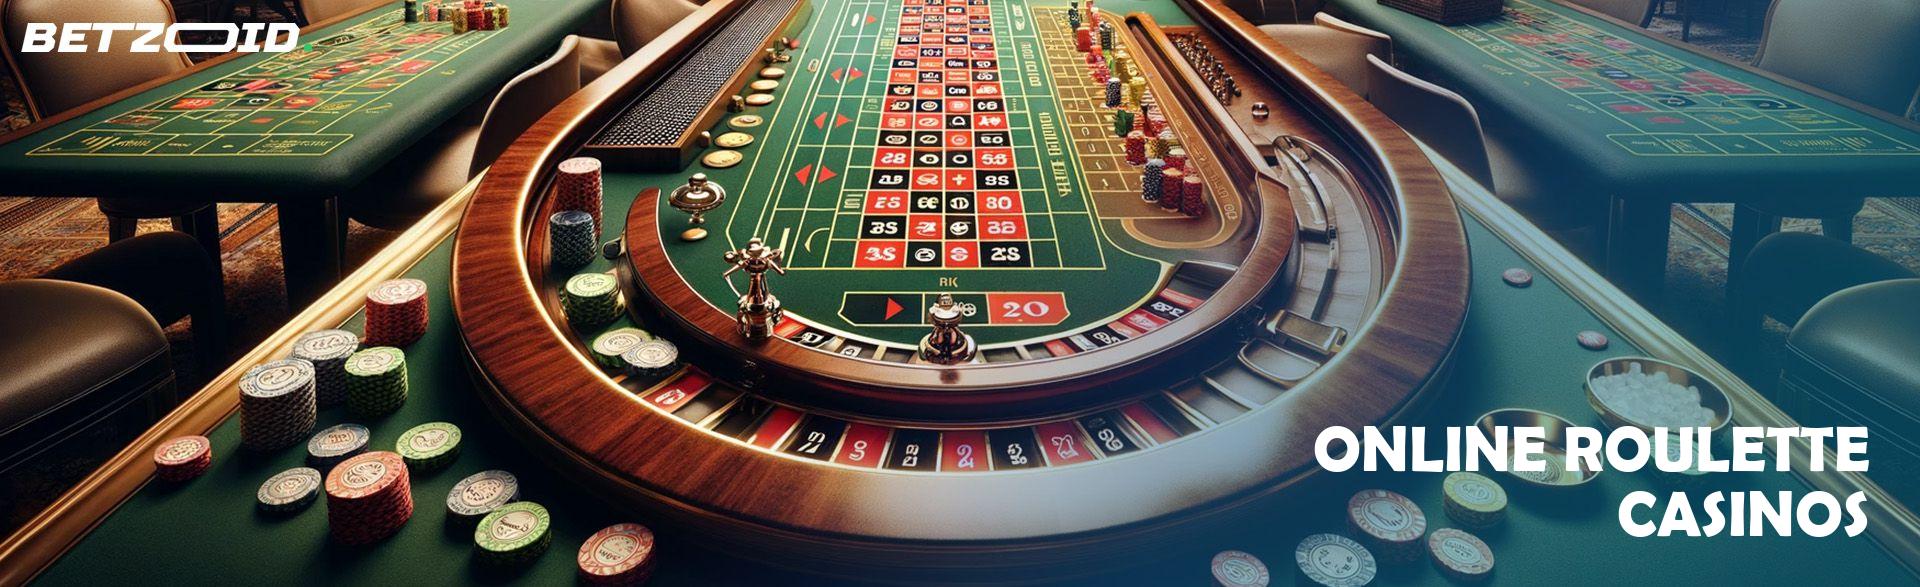 Online Roulette Casinos.